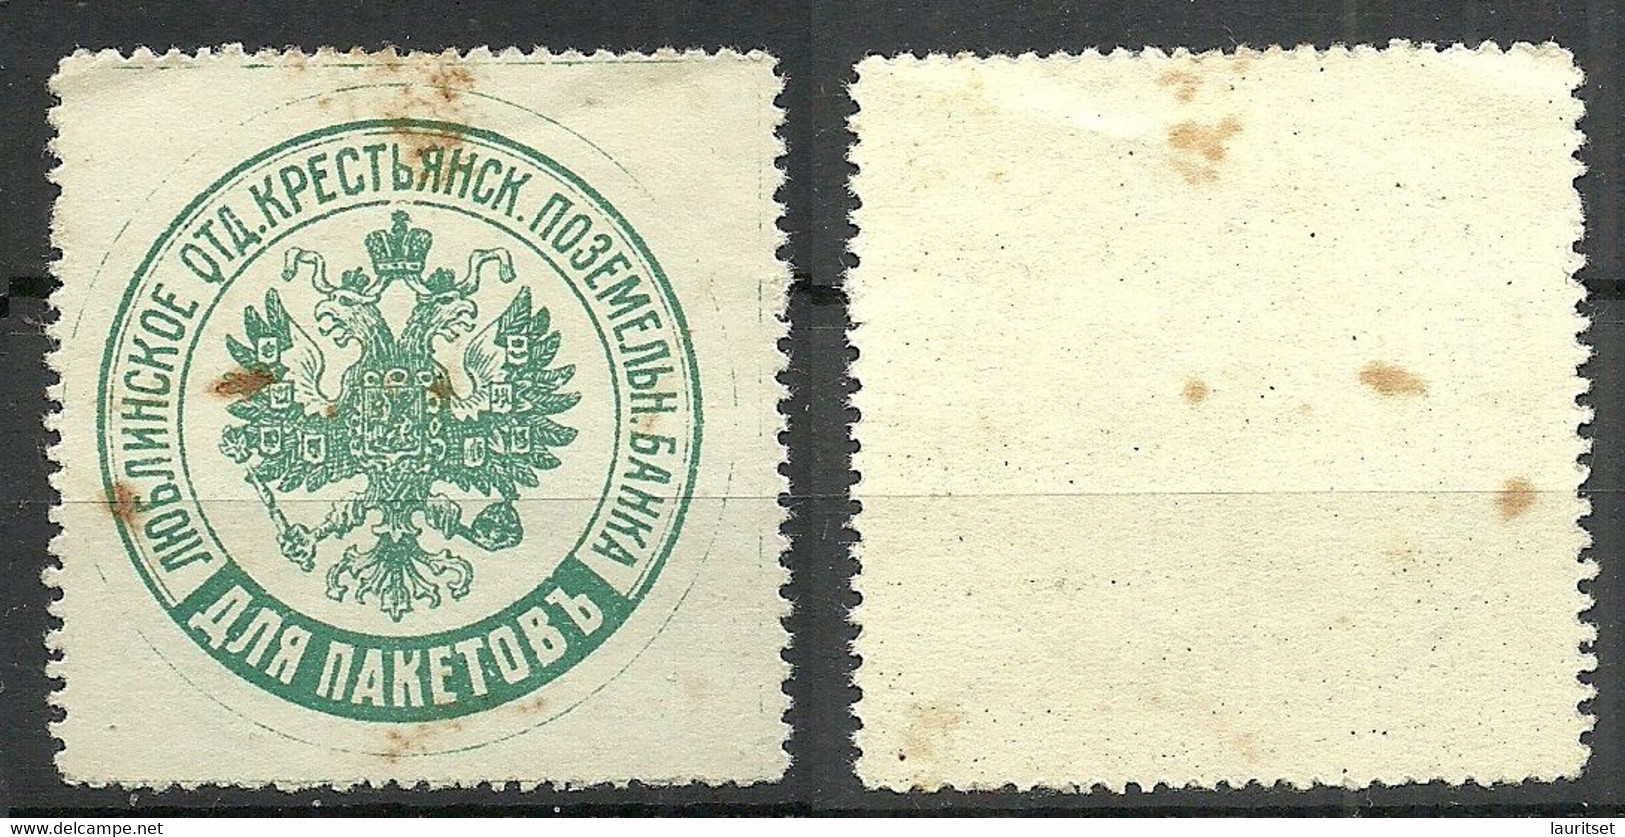 Imperial RUSSLAND RUSSIA Packet Stamp Paketenmarke Original Gum MNH Lublin Bank Poland NB! Rusty Spots! Stockfleckig! - Errors & Oddities